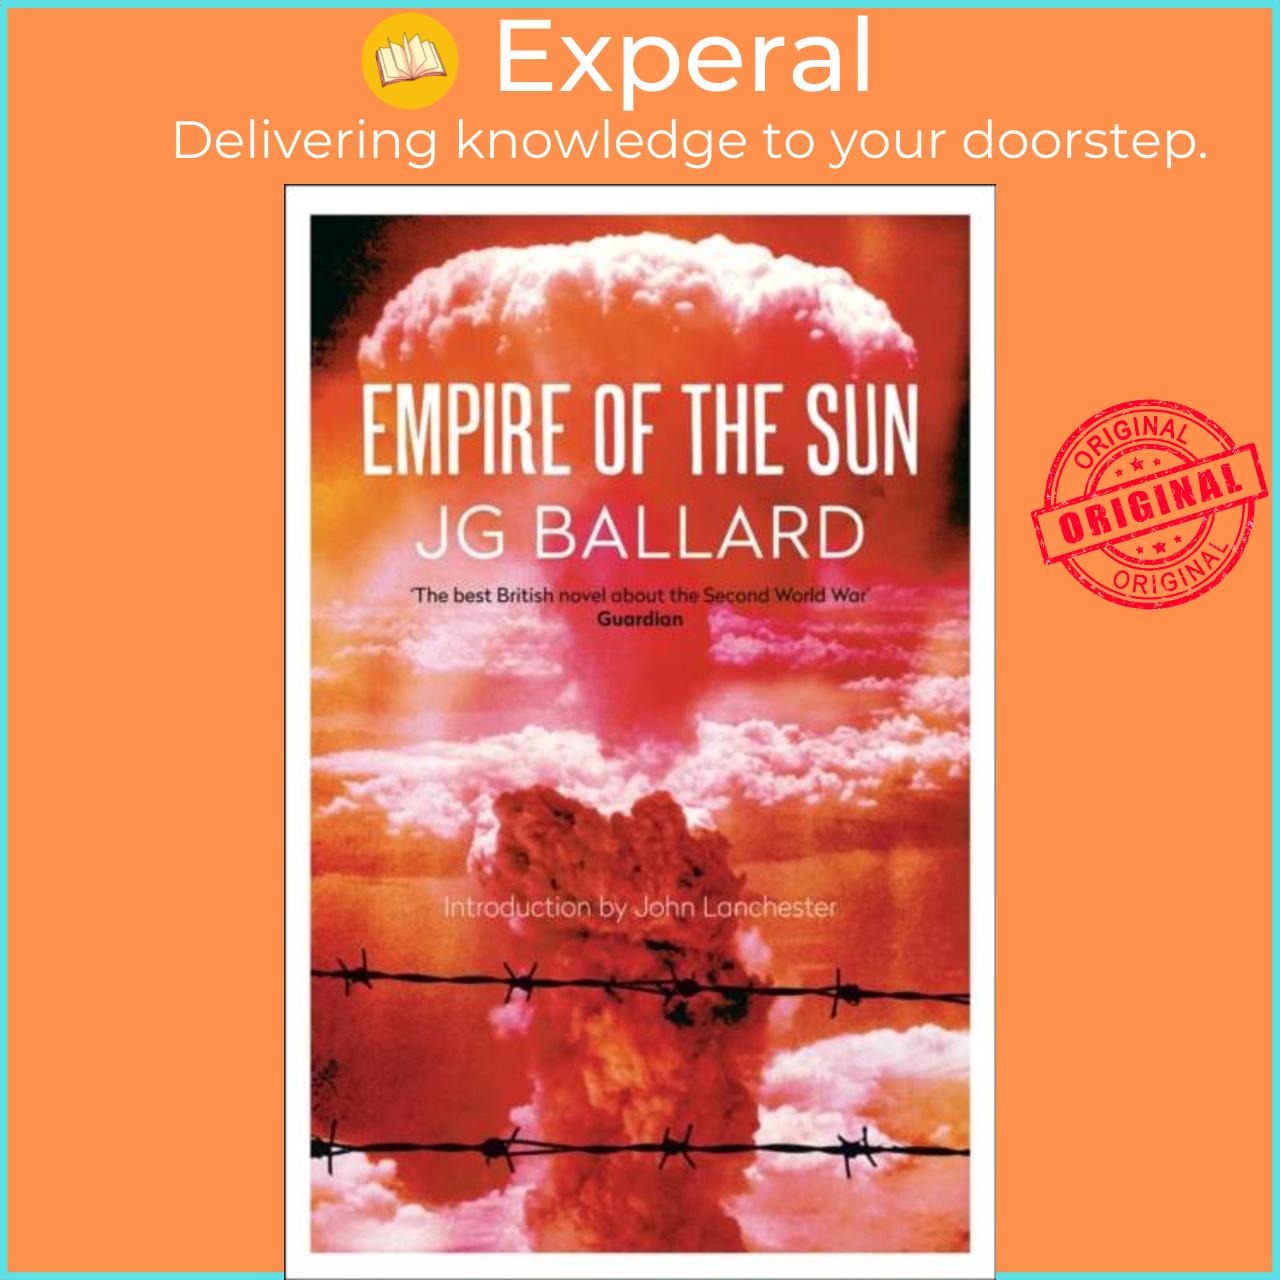 Sách - Empire of the Sun by J. G. Ballard (UK edition, paperback)